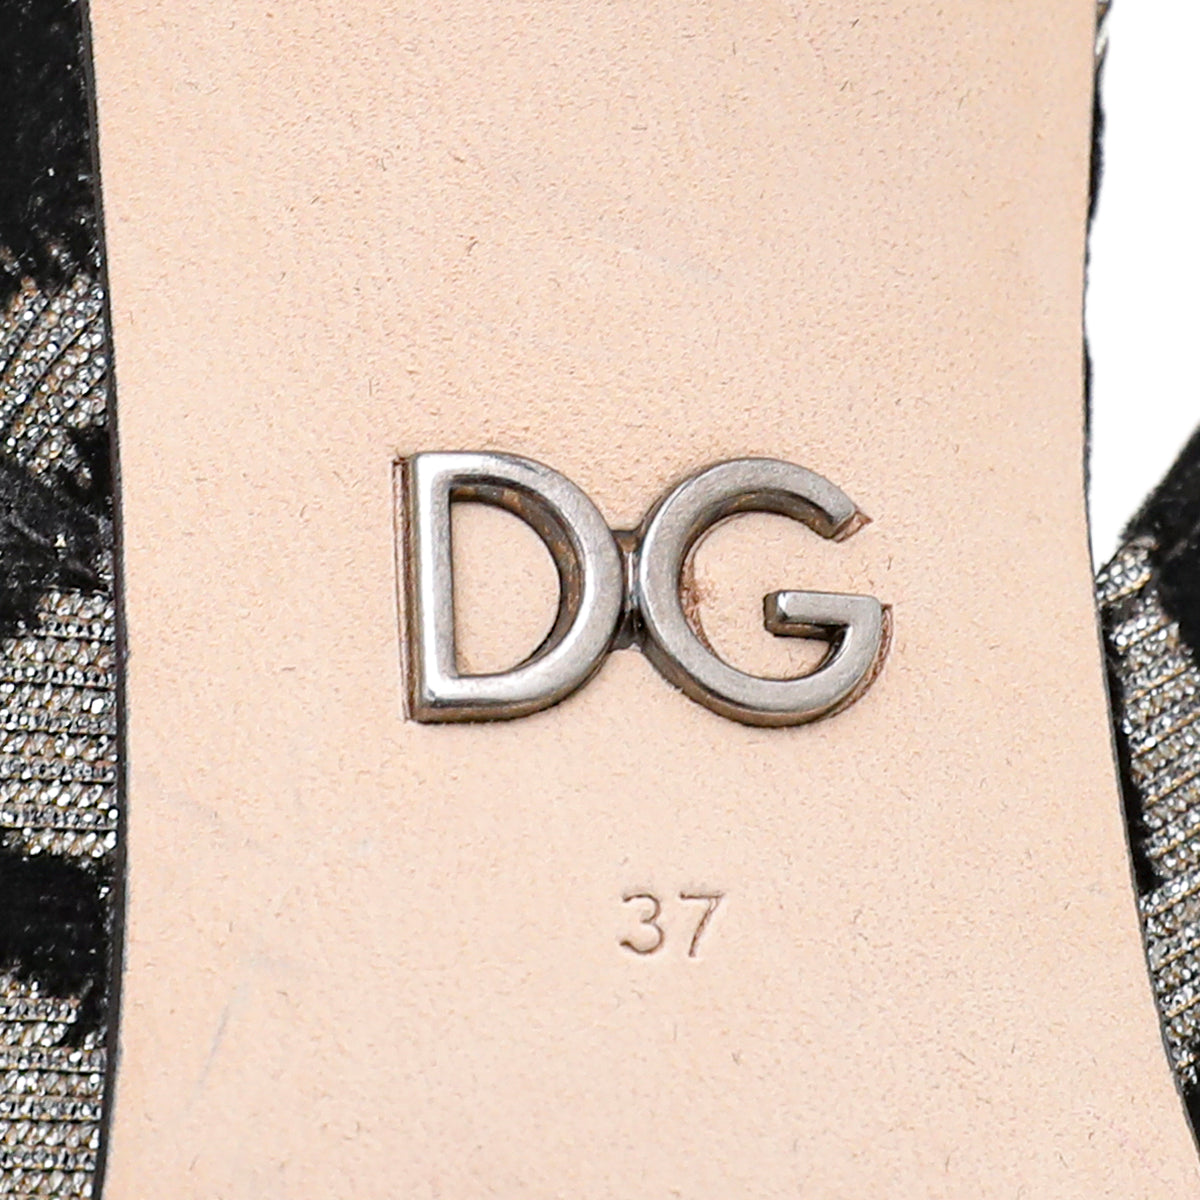 Dolce & Gabbana Bicolor Glitter Bellucci Crystal Slingback 37